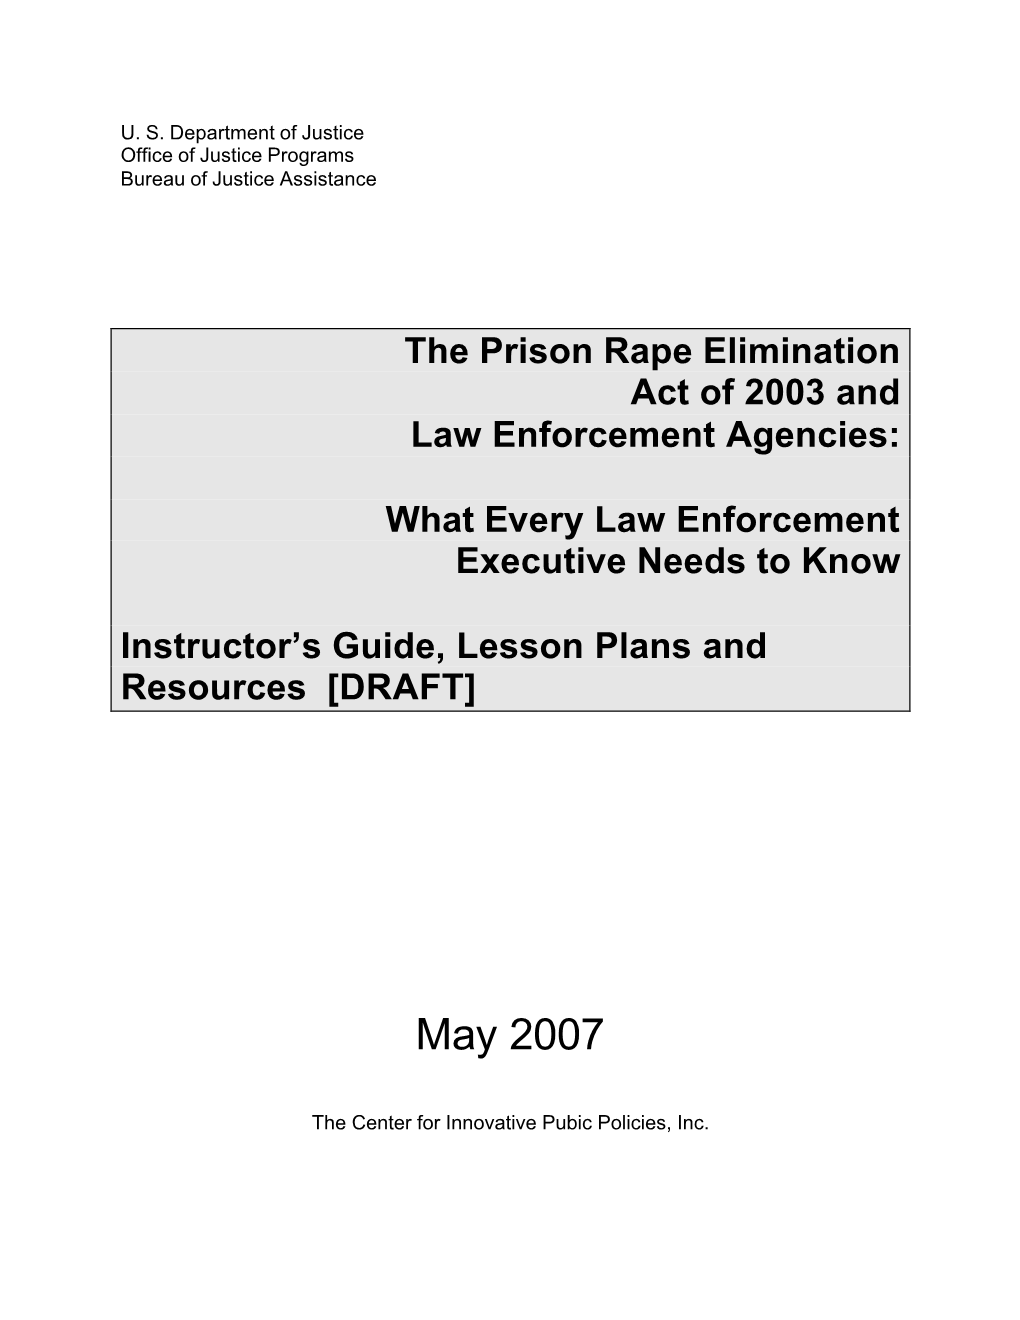 The Prison Rape Elimination Act of 2003 and Law Enforcement Agencies